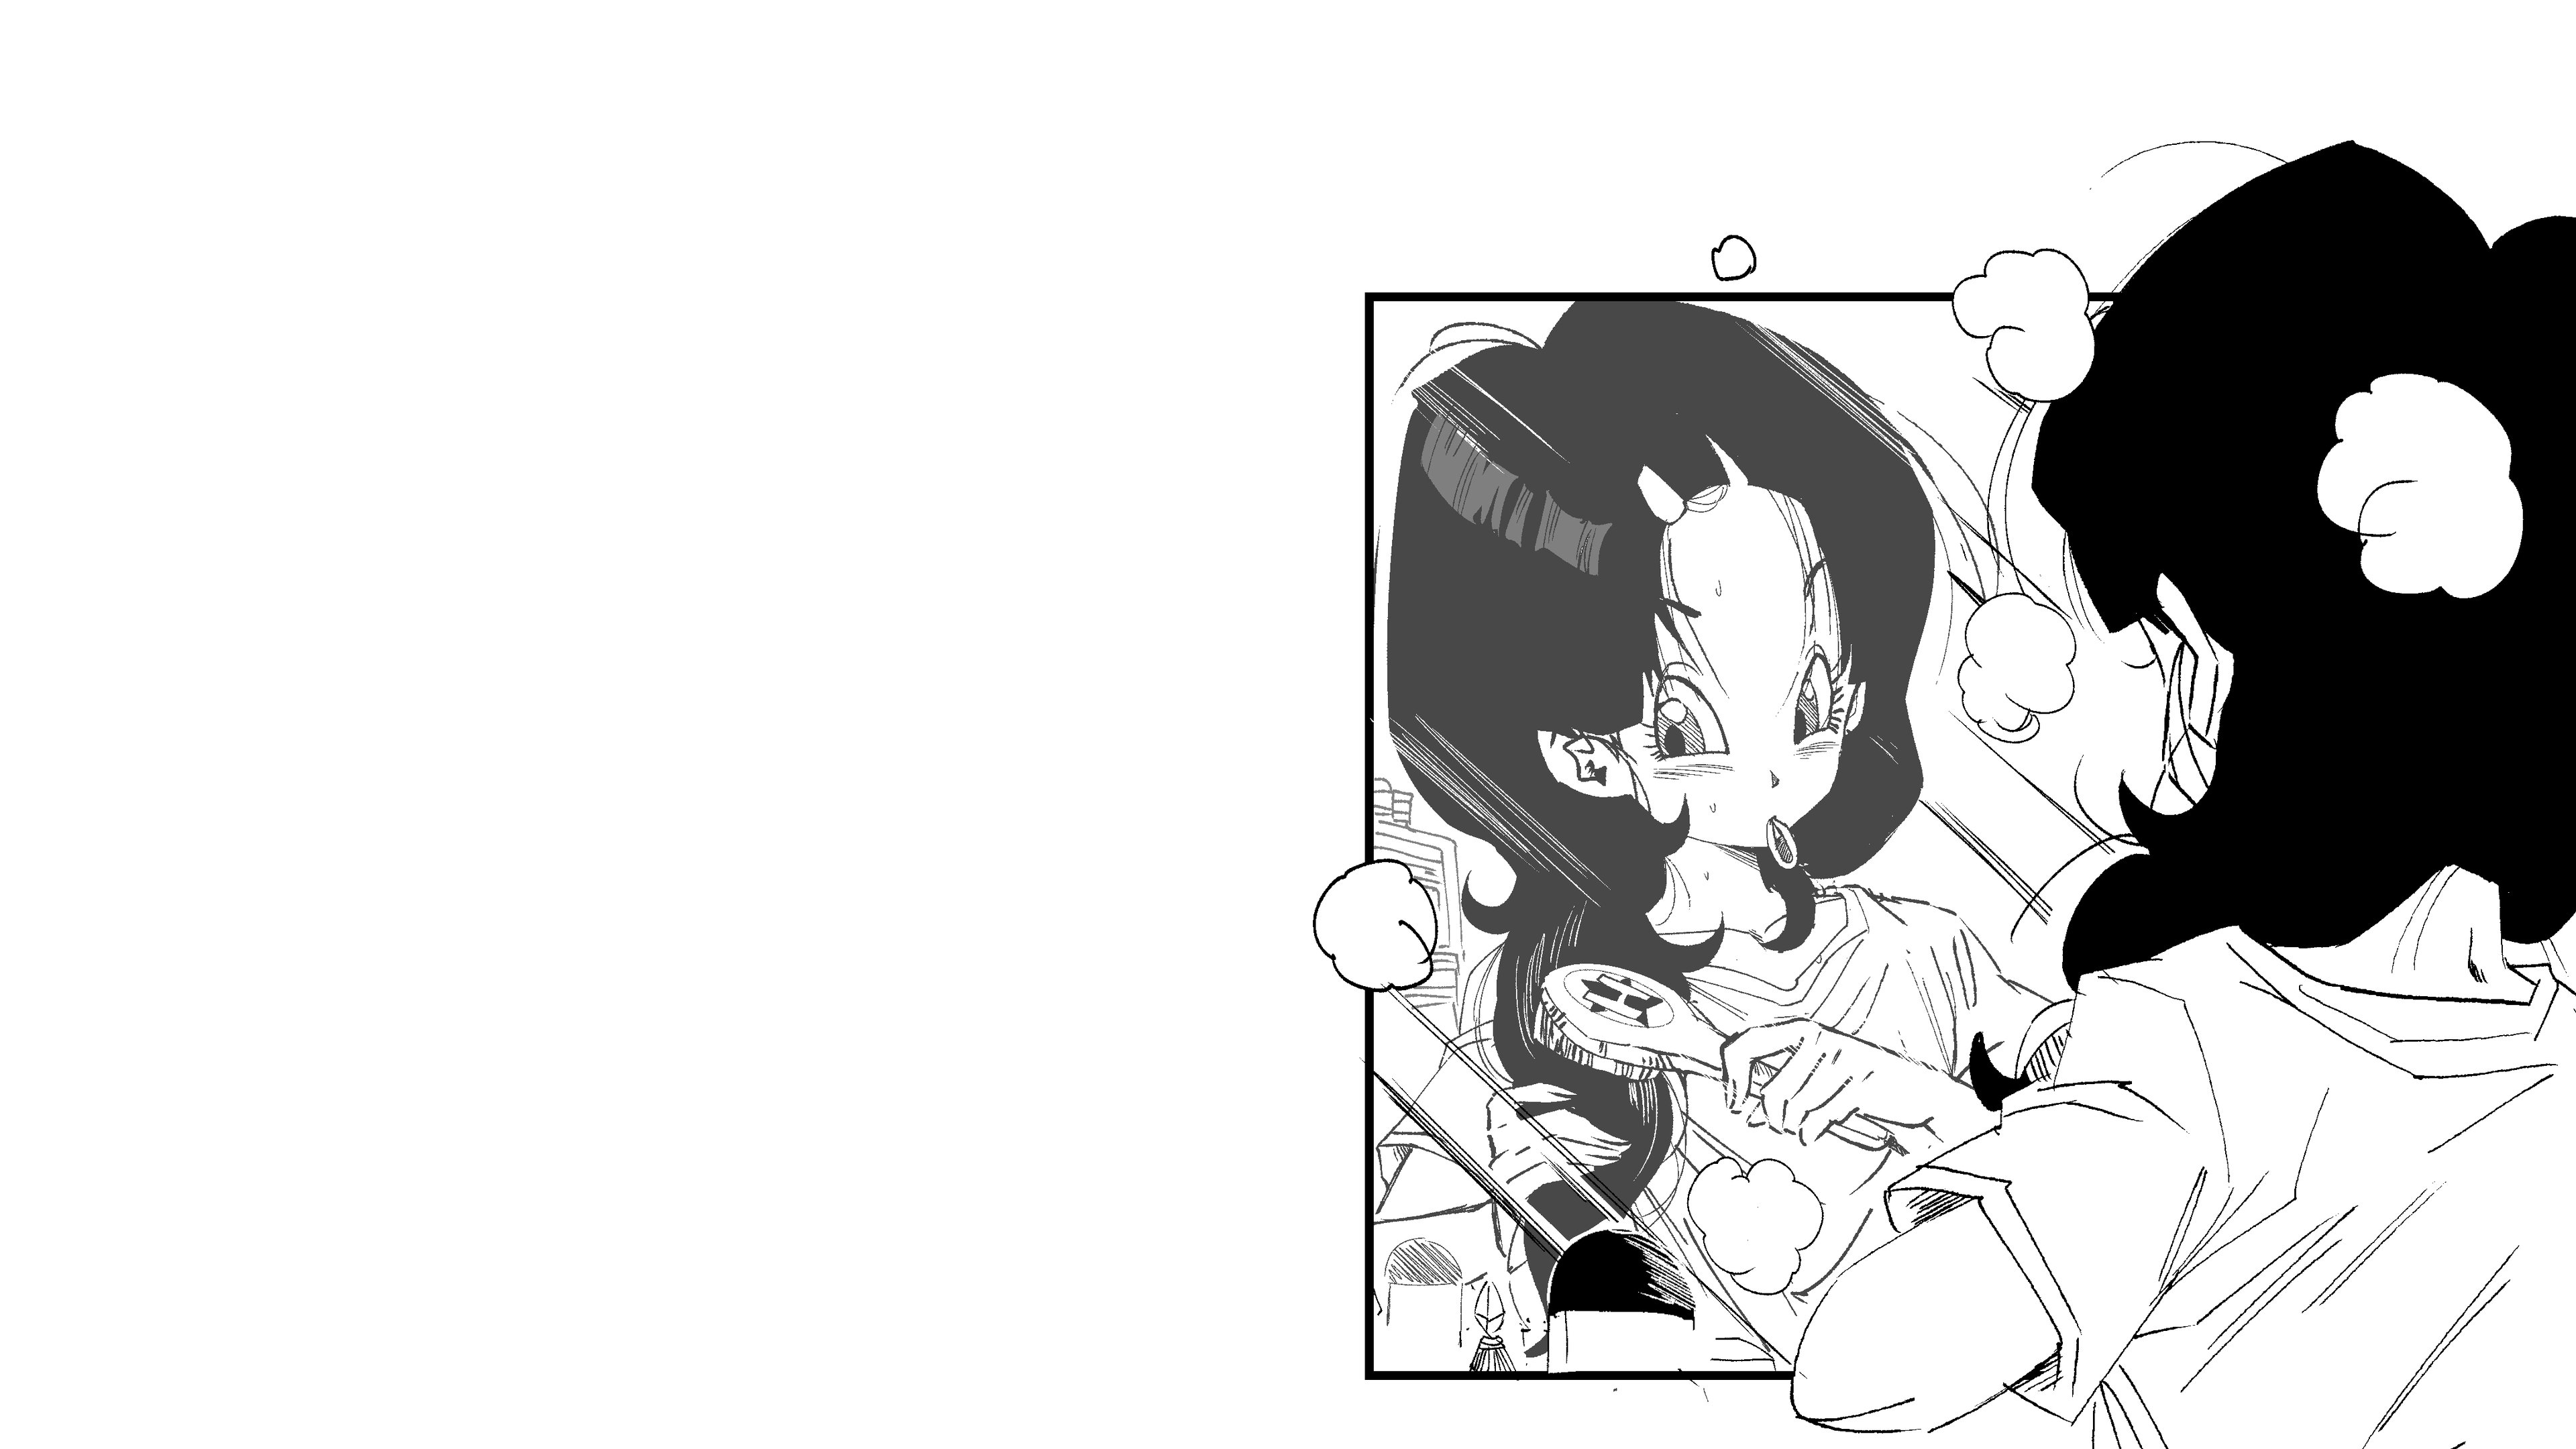 Anime 3840x2160 anime girls black hair dark hair Dragon Ball Dragon Ball Z Videl mirror mirrored white shirt hair ornament white background brush long hair reflection anime simple background fenyo_n